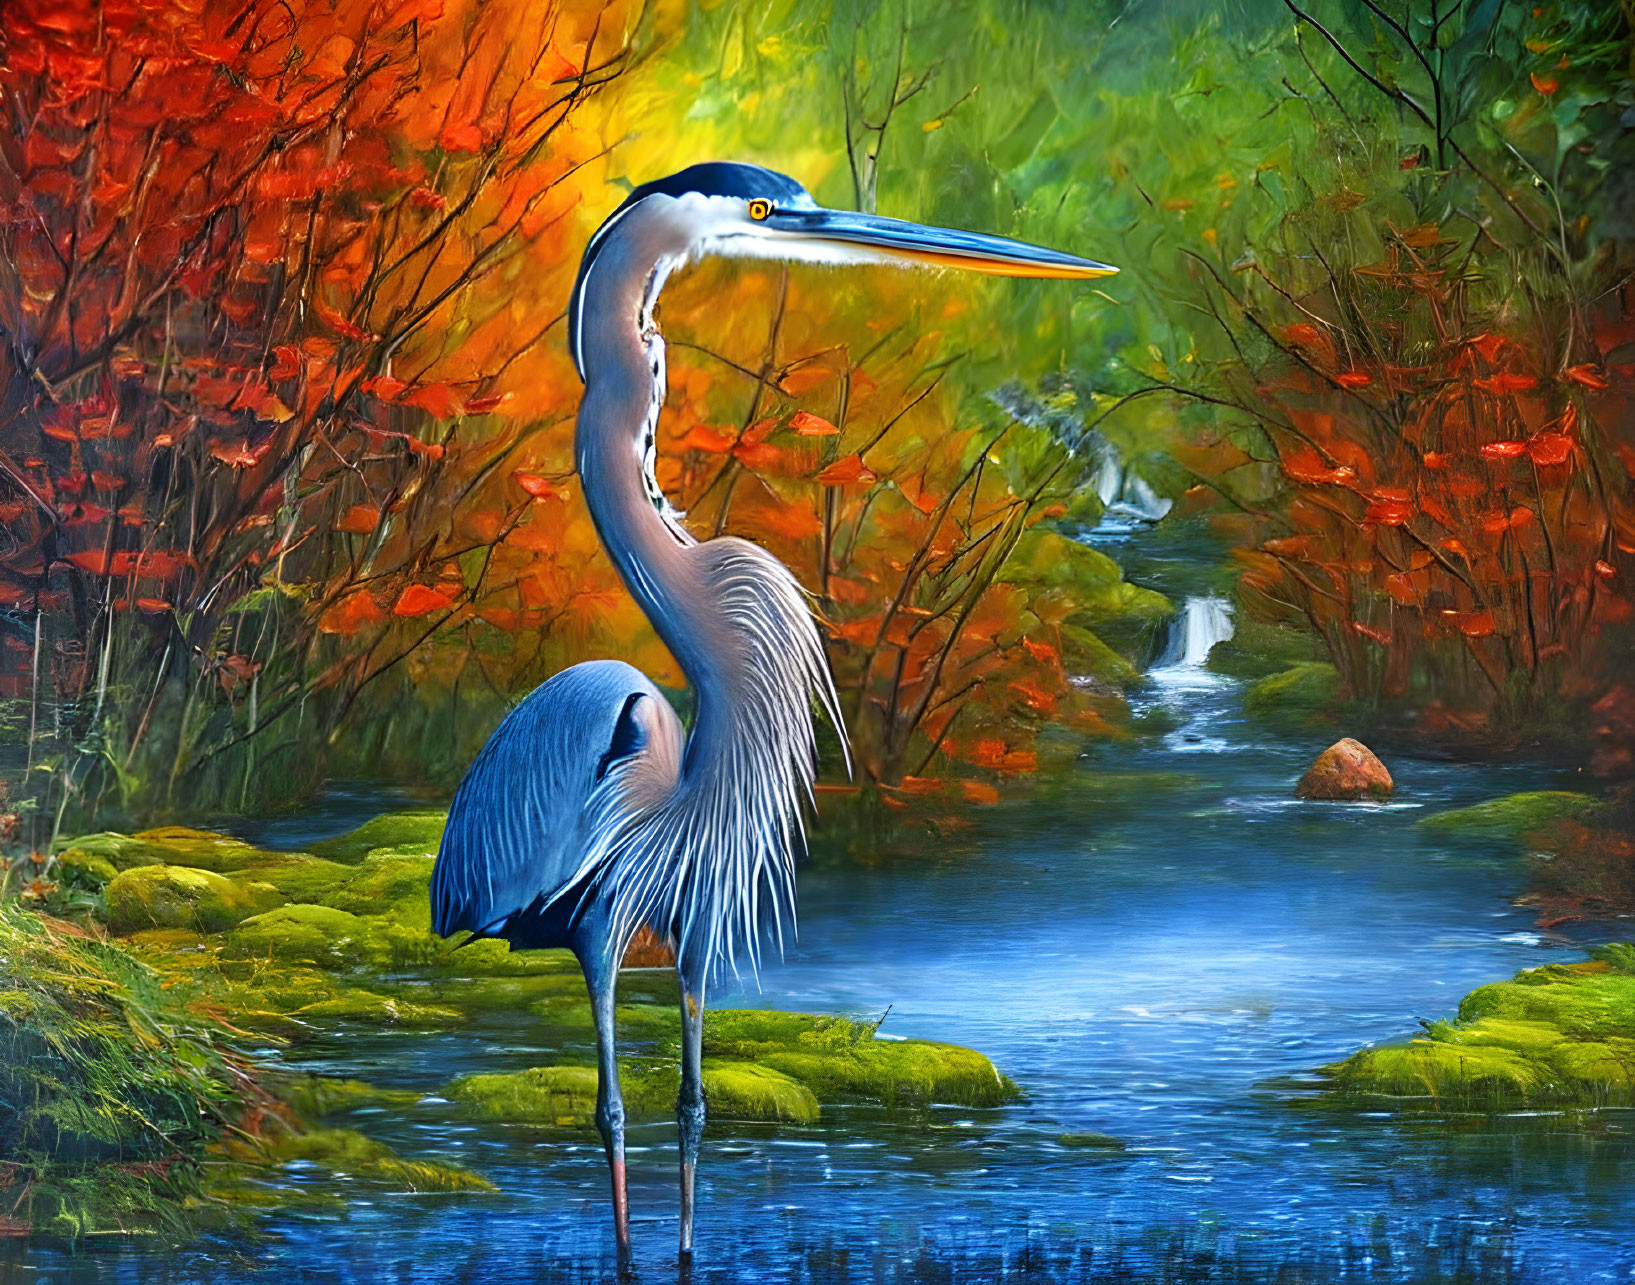 Graceful Great Blue Heron in Autumn Stream Scene